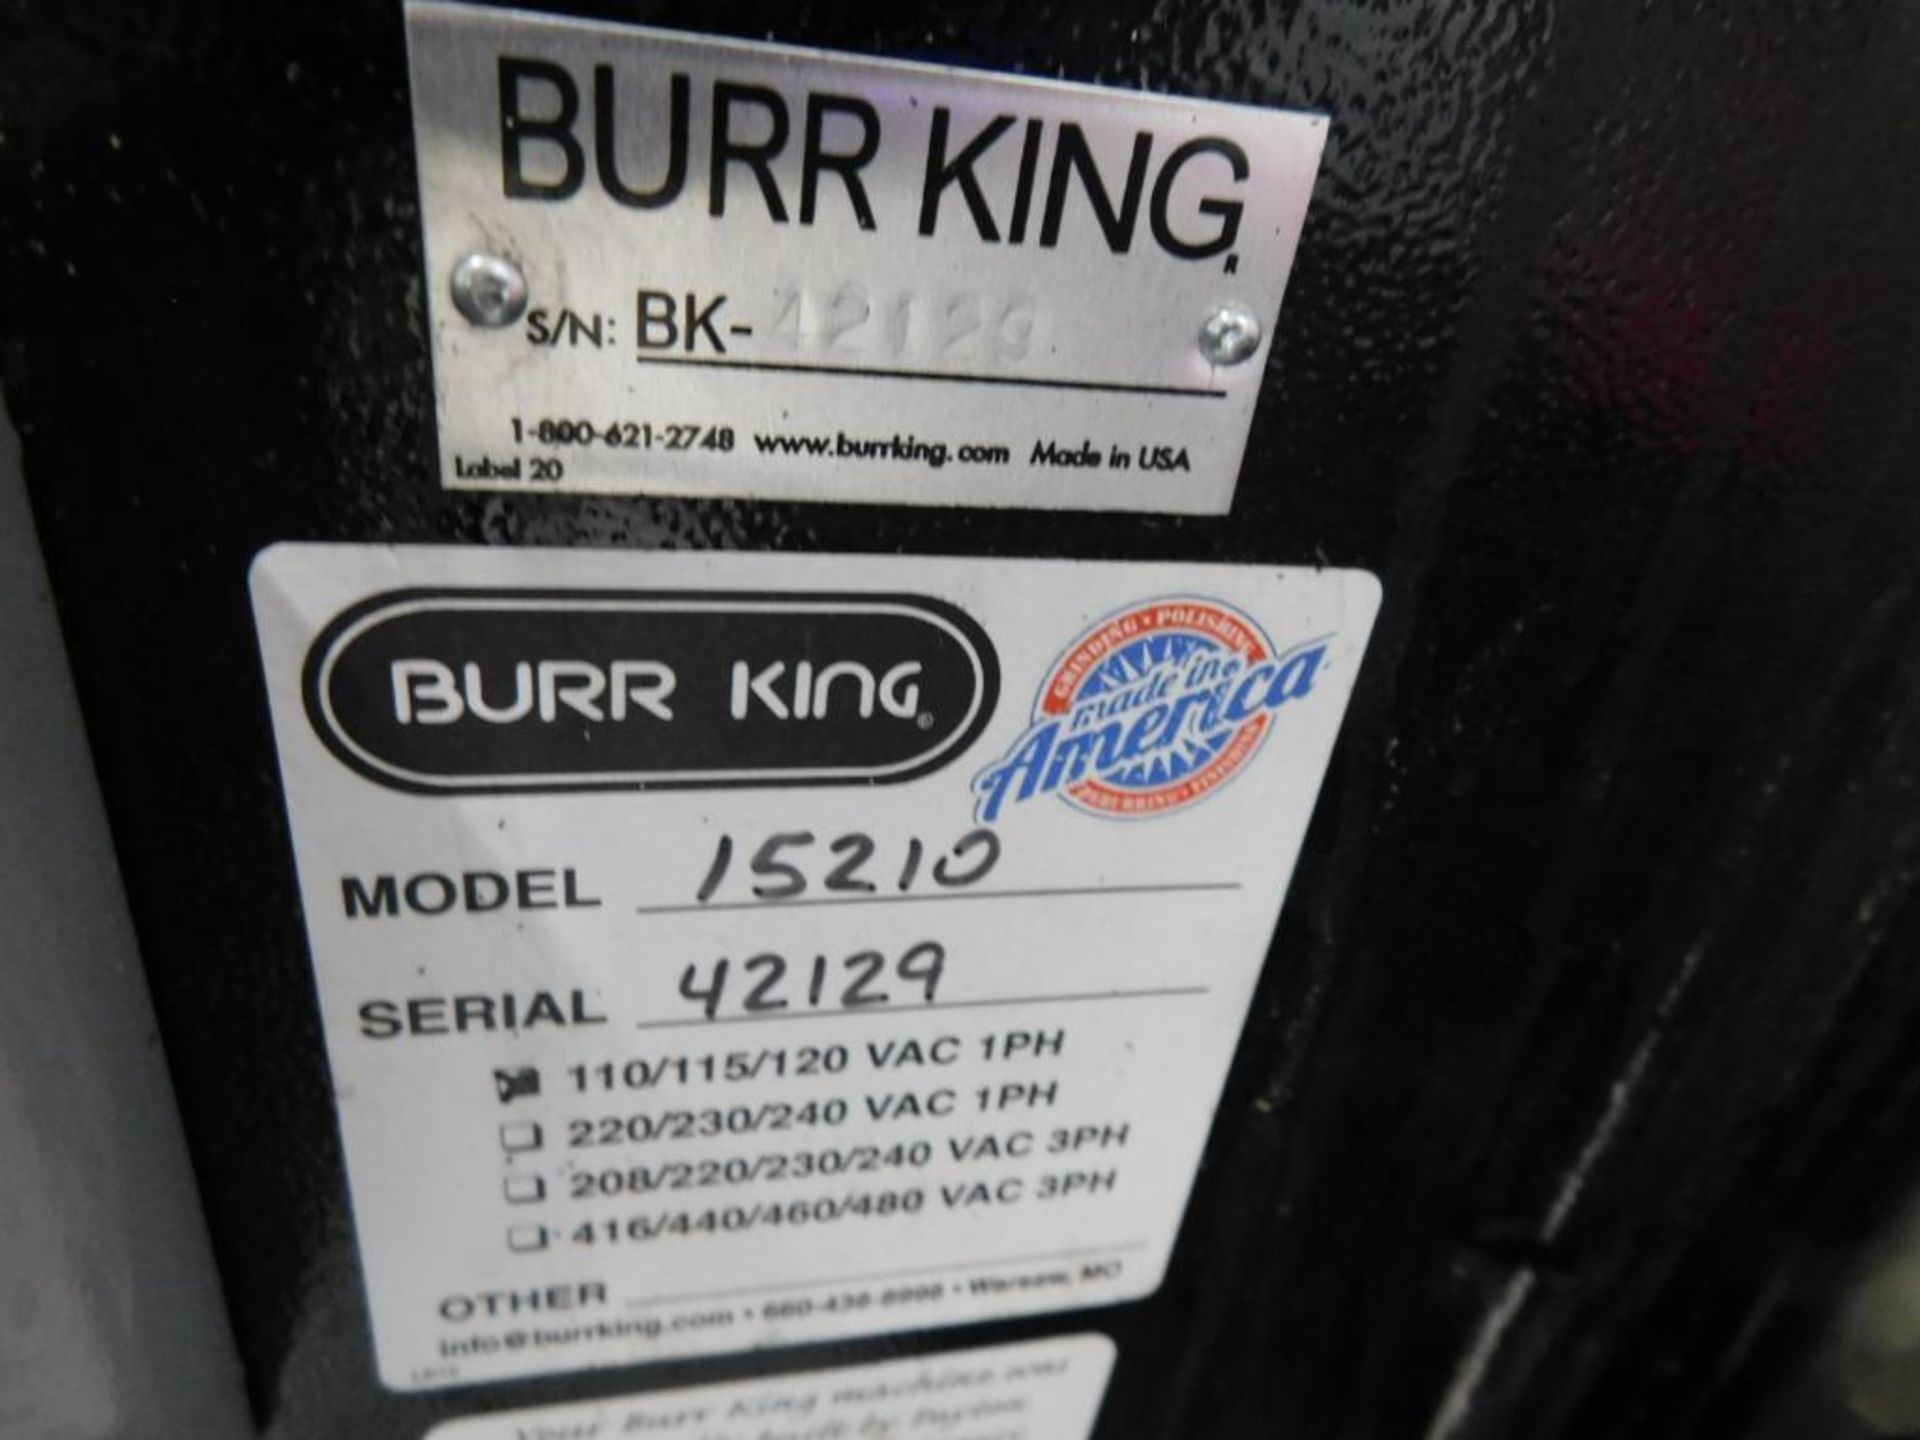 Burr King Model 15210 Vibratory Duburring System, w/Optidrive Control - Image 5 of 5